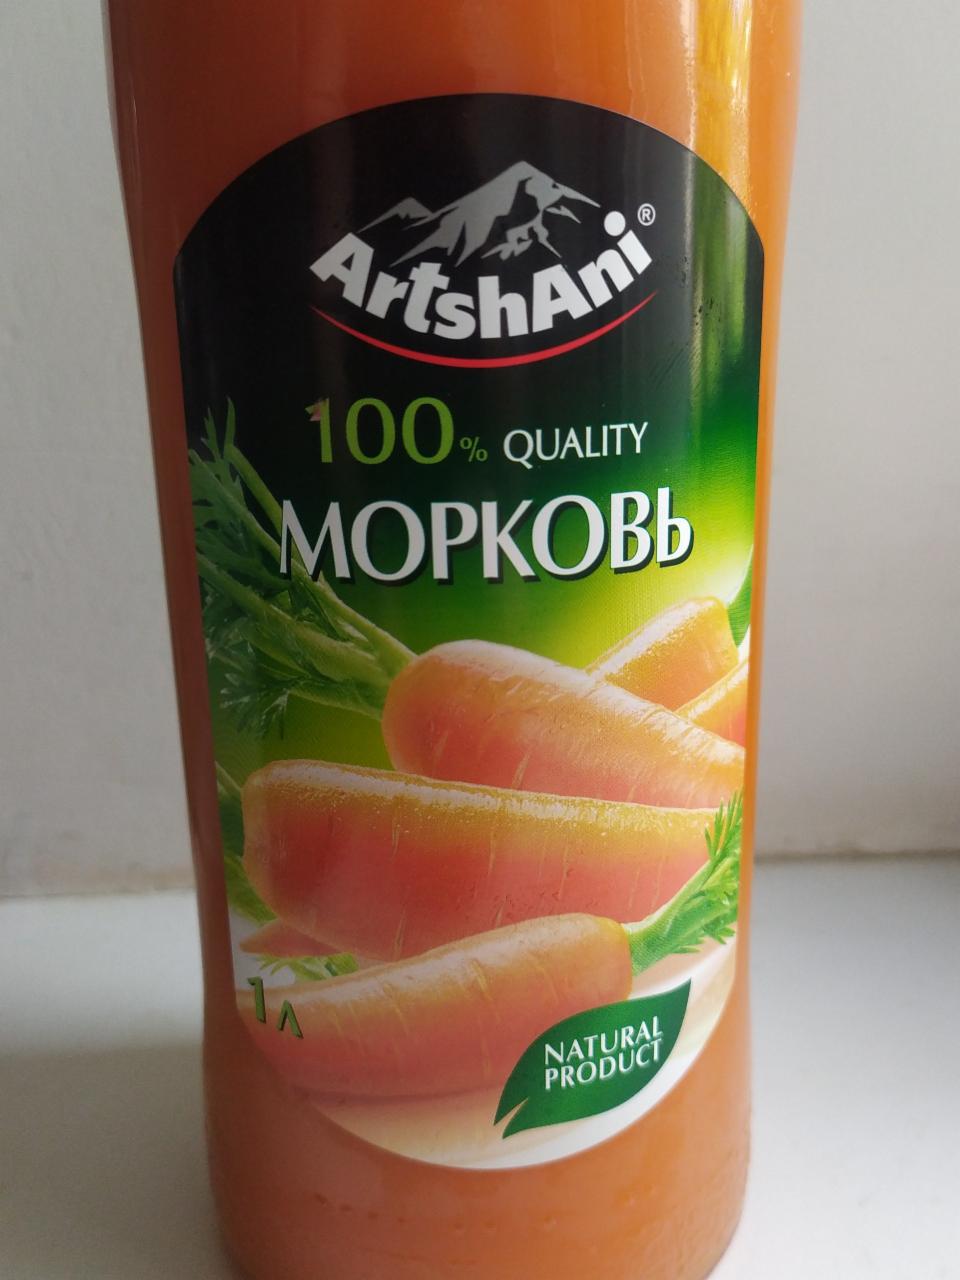 Фото - Морковный сок 100% quality ArtshAni